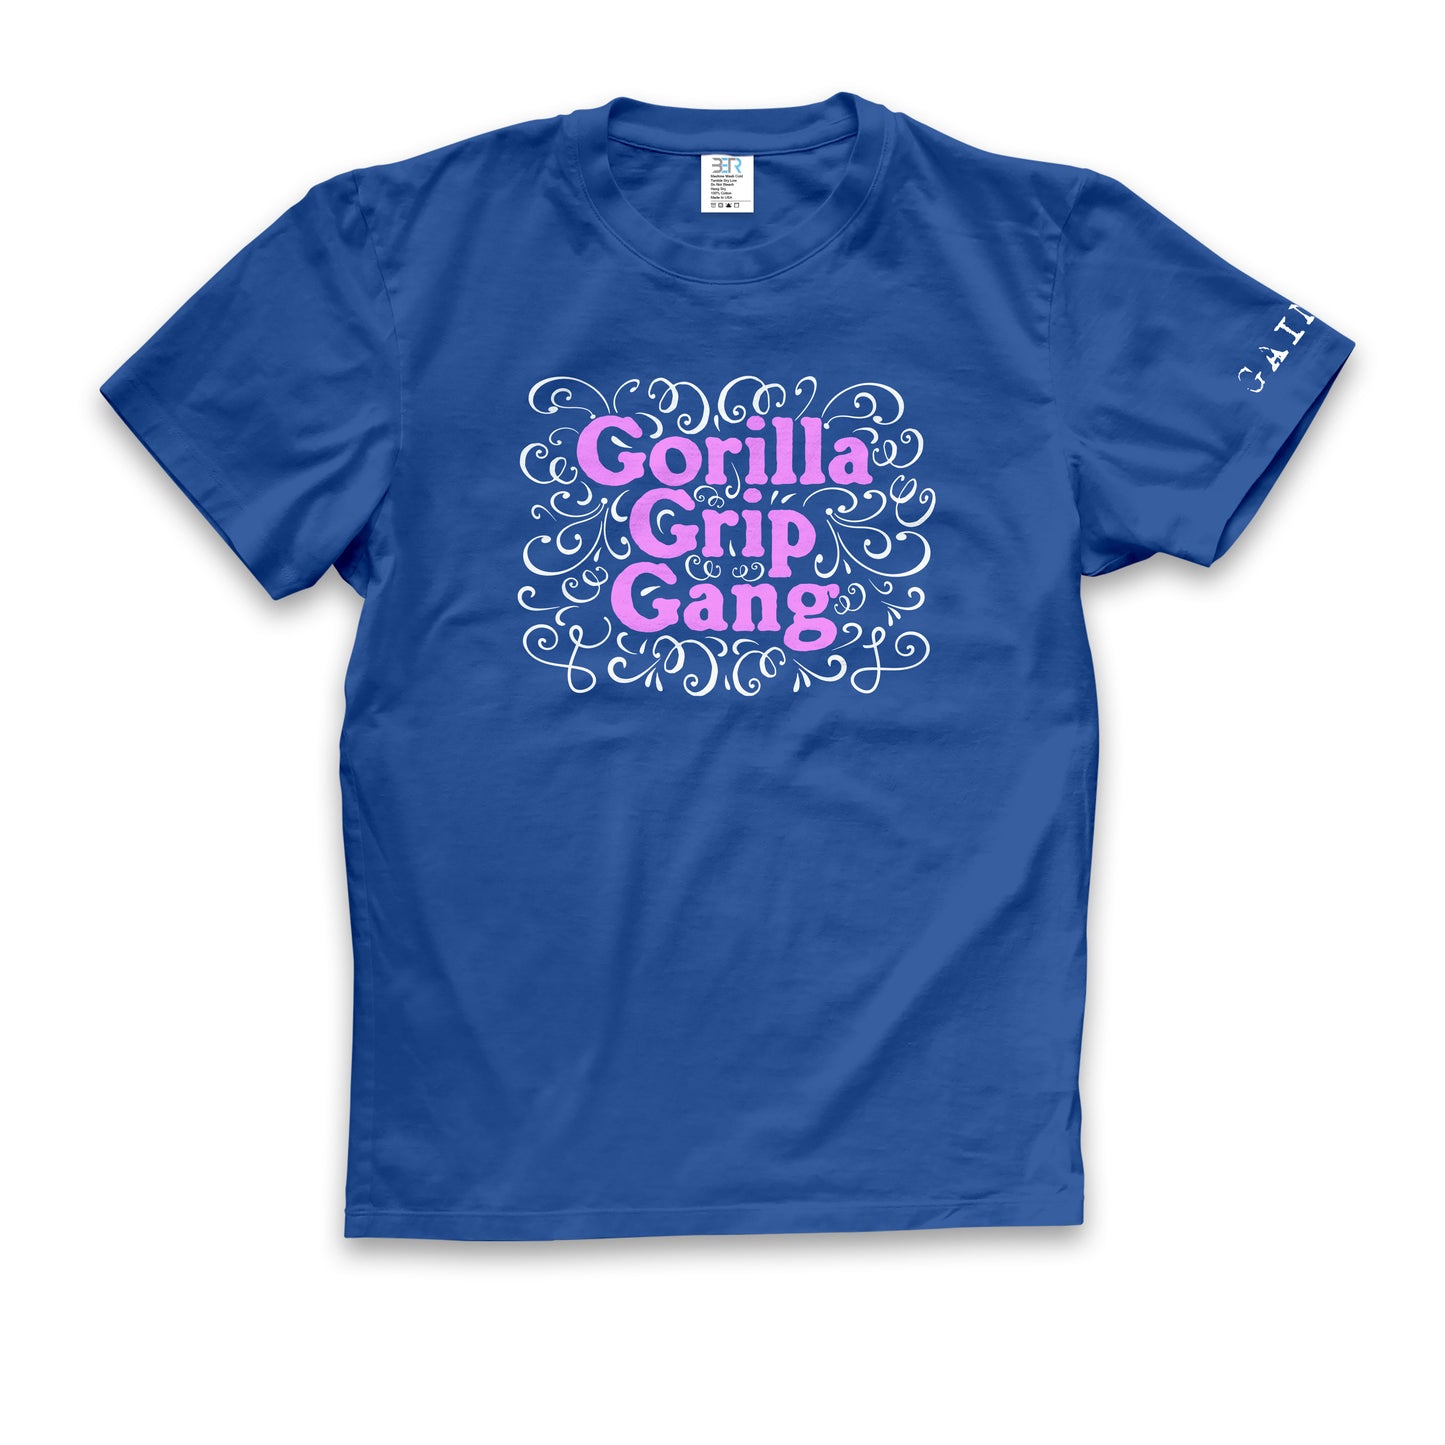 Gorilla Grip Gang tee